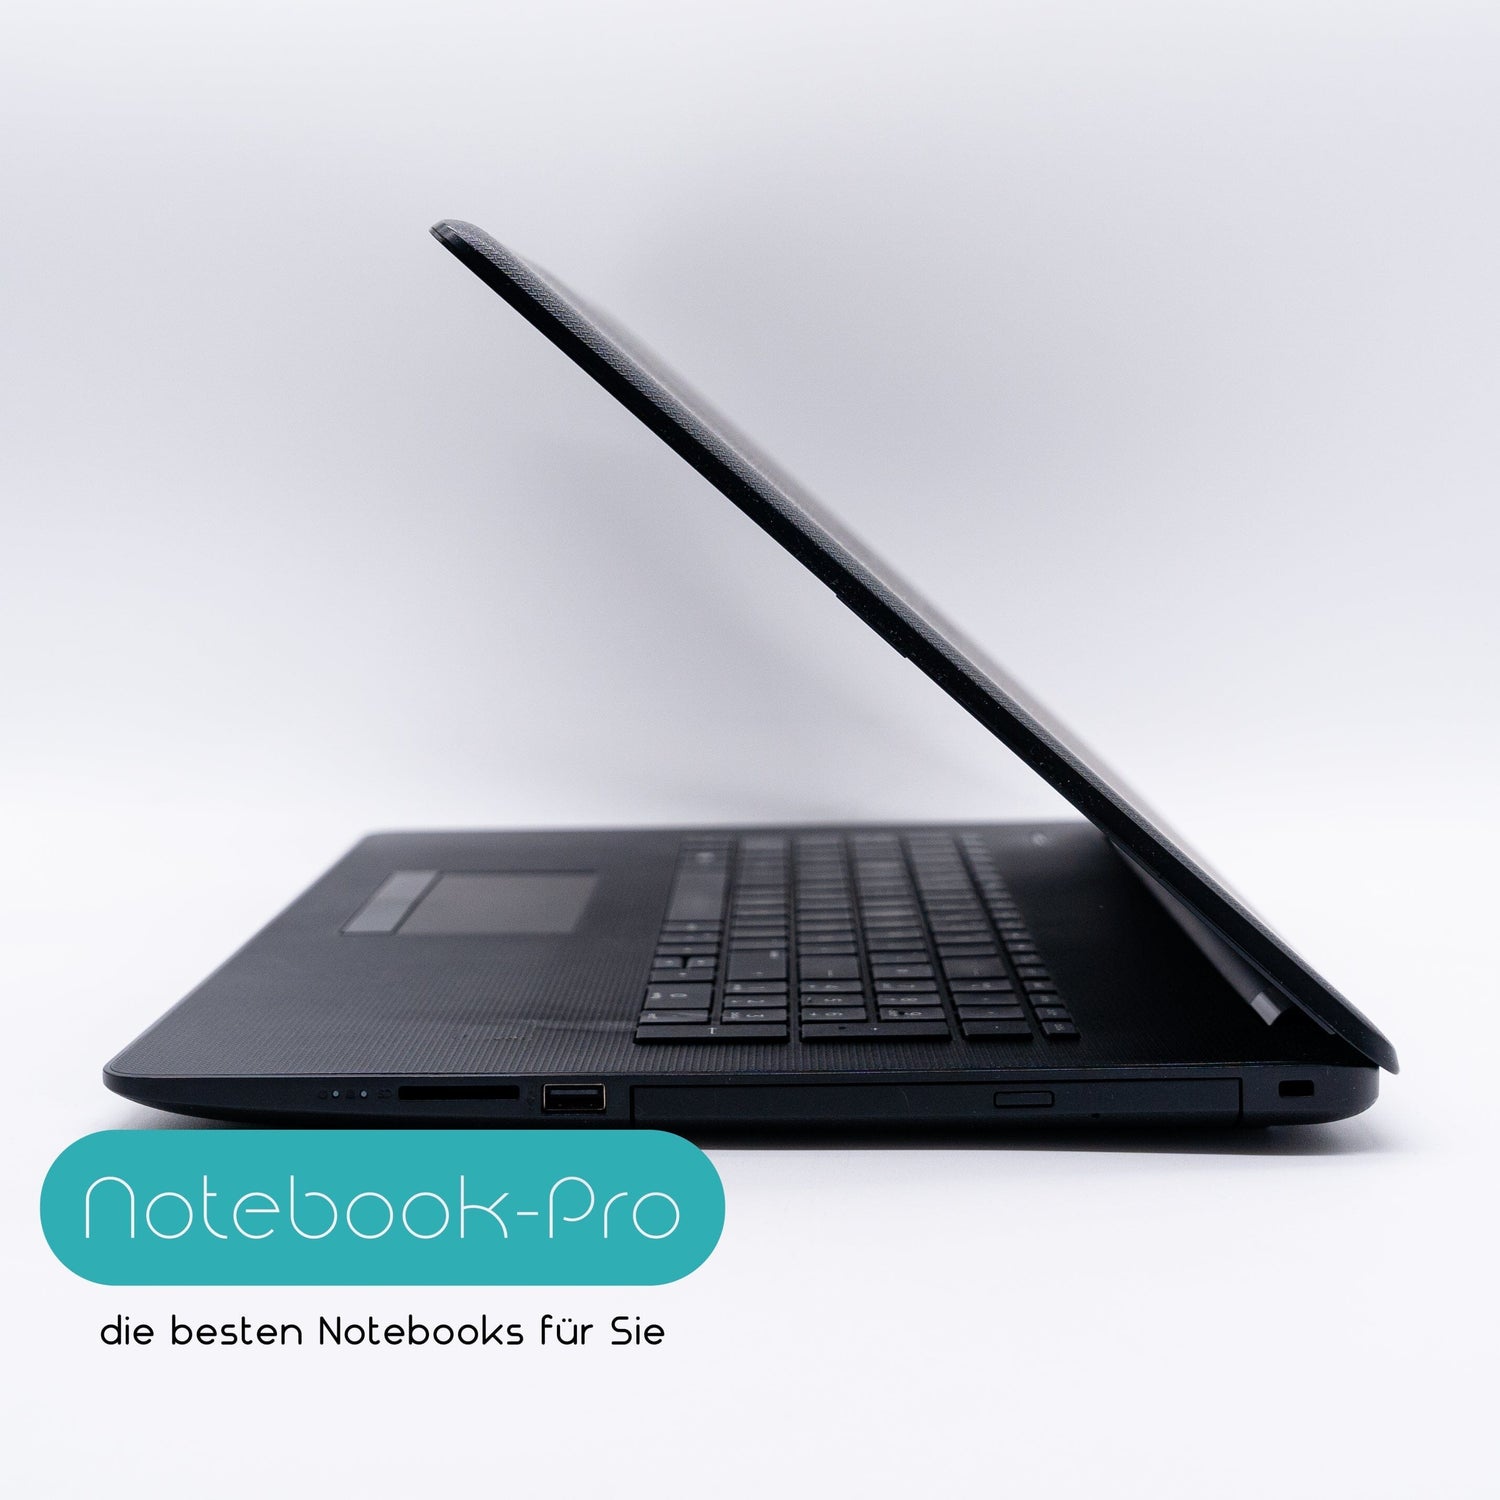 HP Notebook i7-6500U 17,3 Zoll HD+ DVD/RW-Laufwerk 256GB SSD Laptops Notebook-Pro 